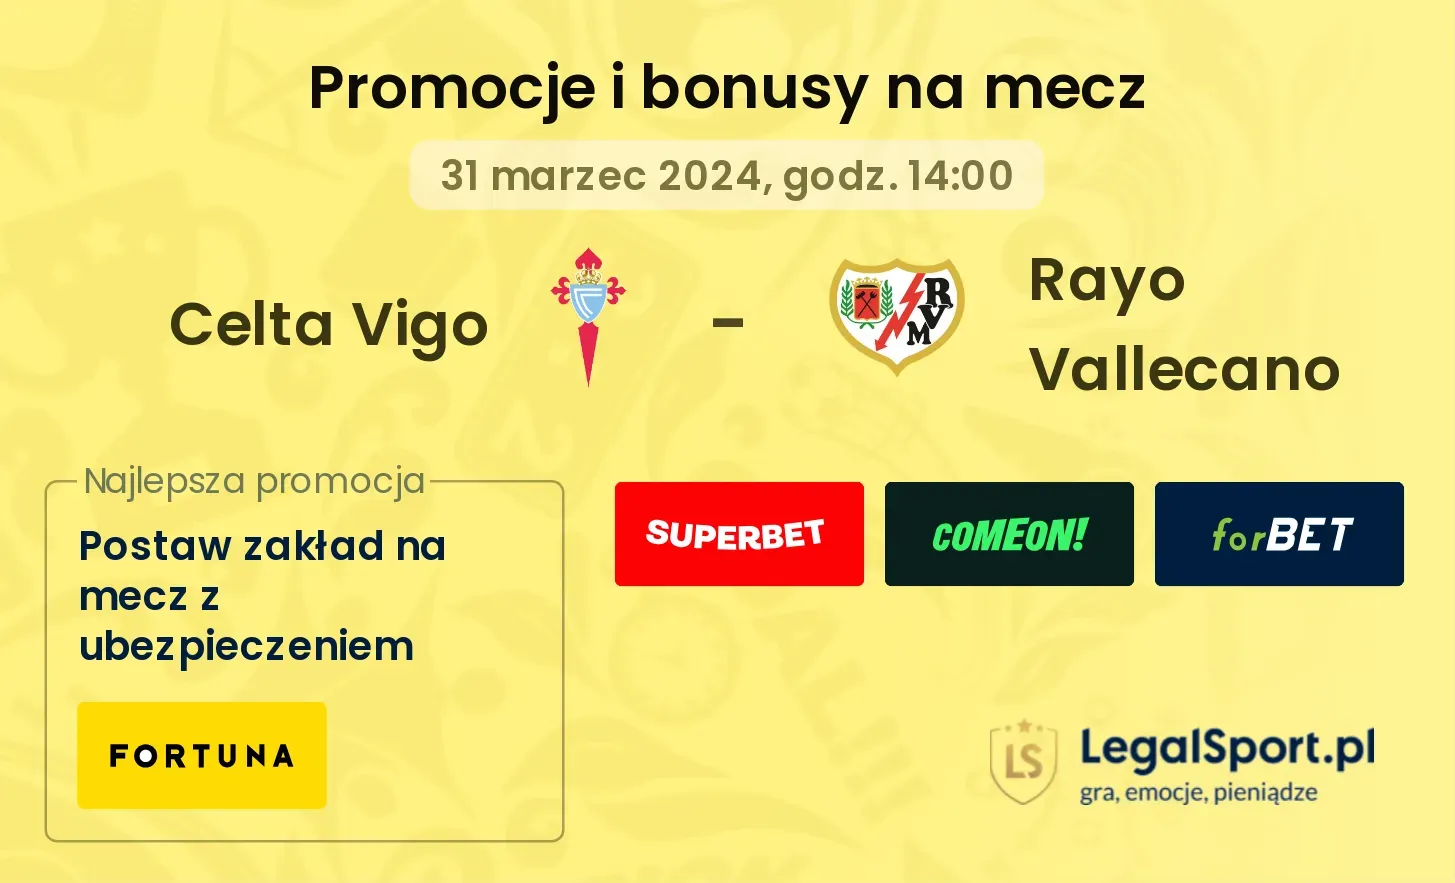 Celta Vigo - Rayo Vallecano promocje bonusy na mecz